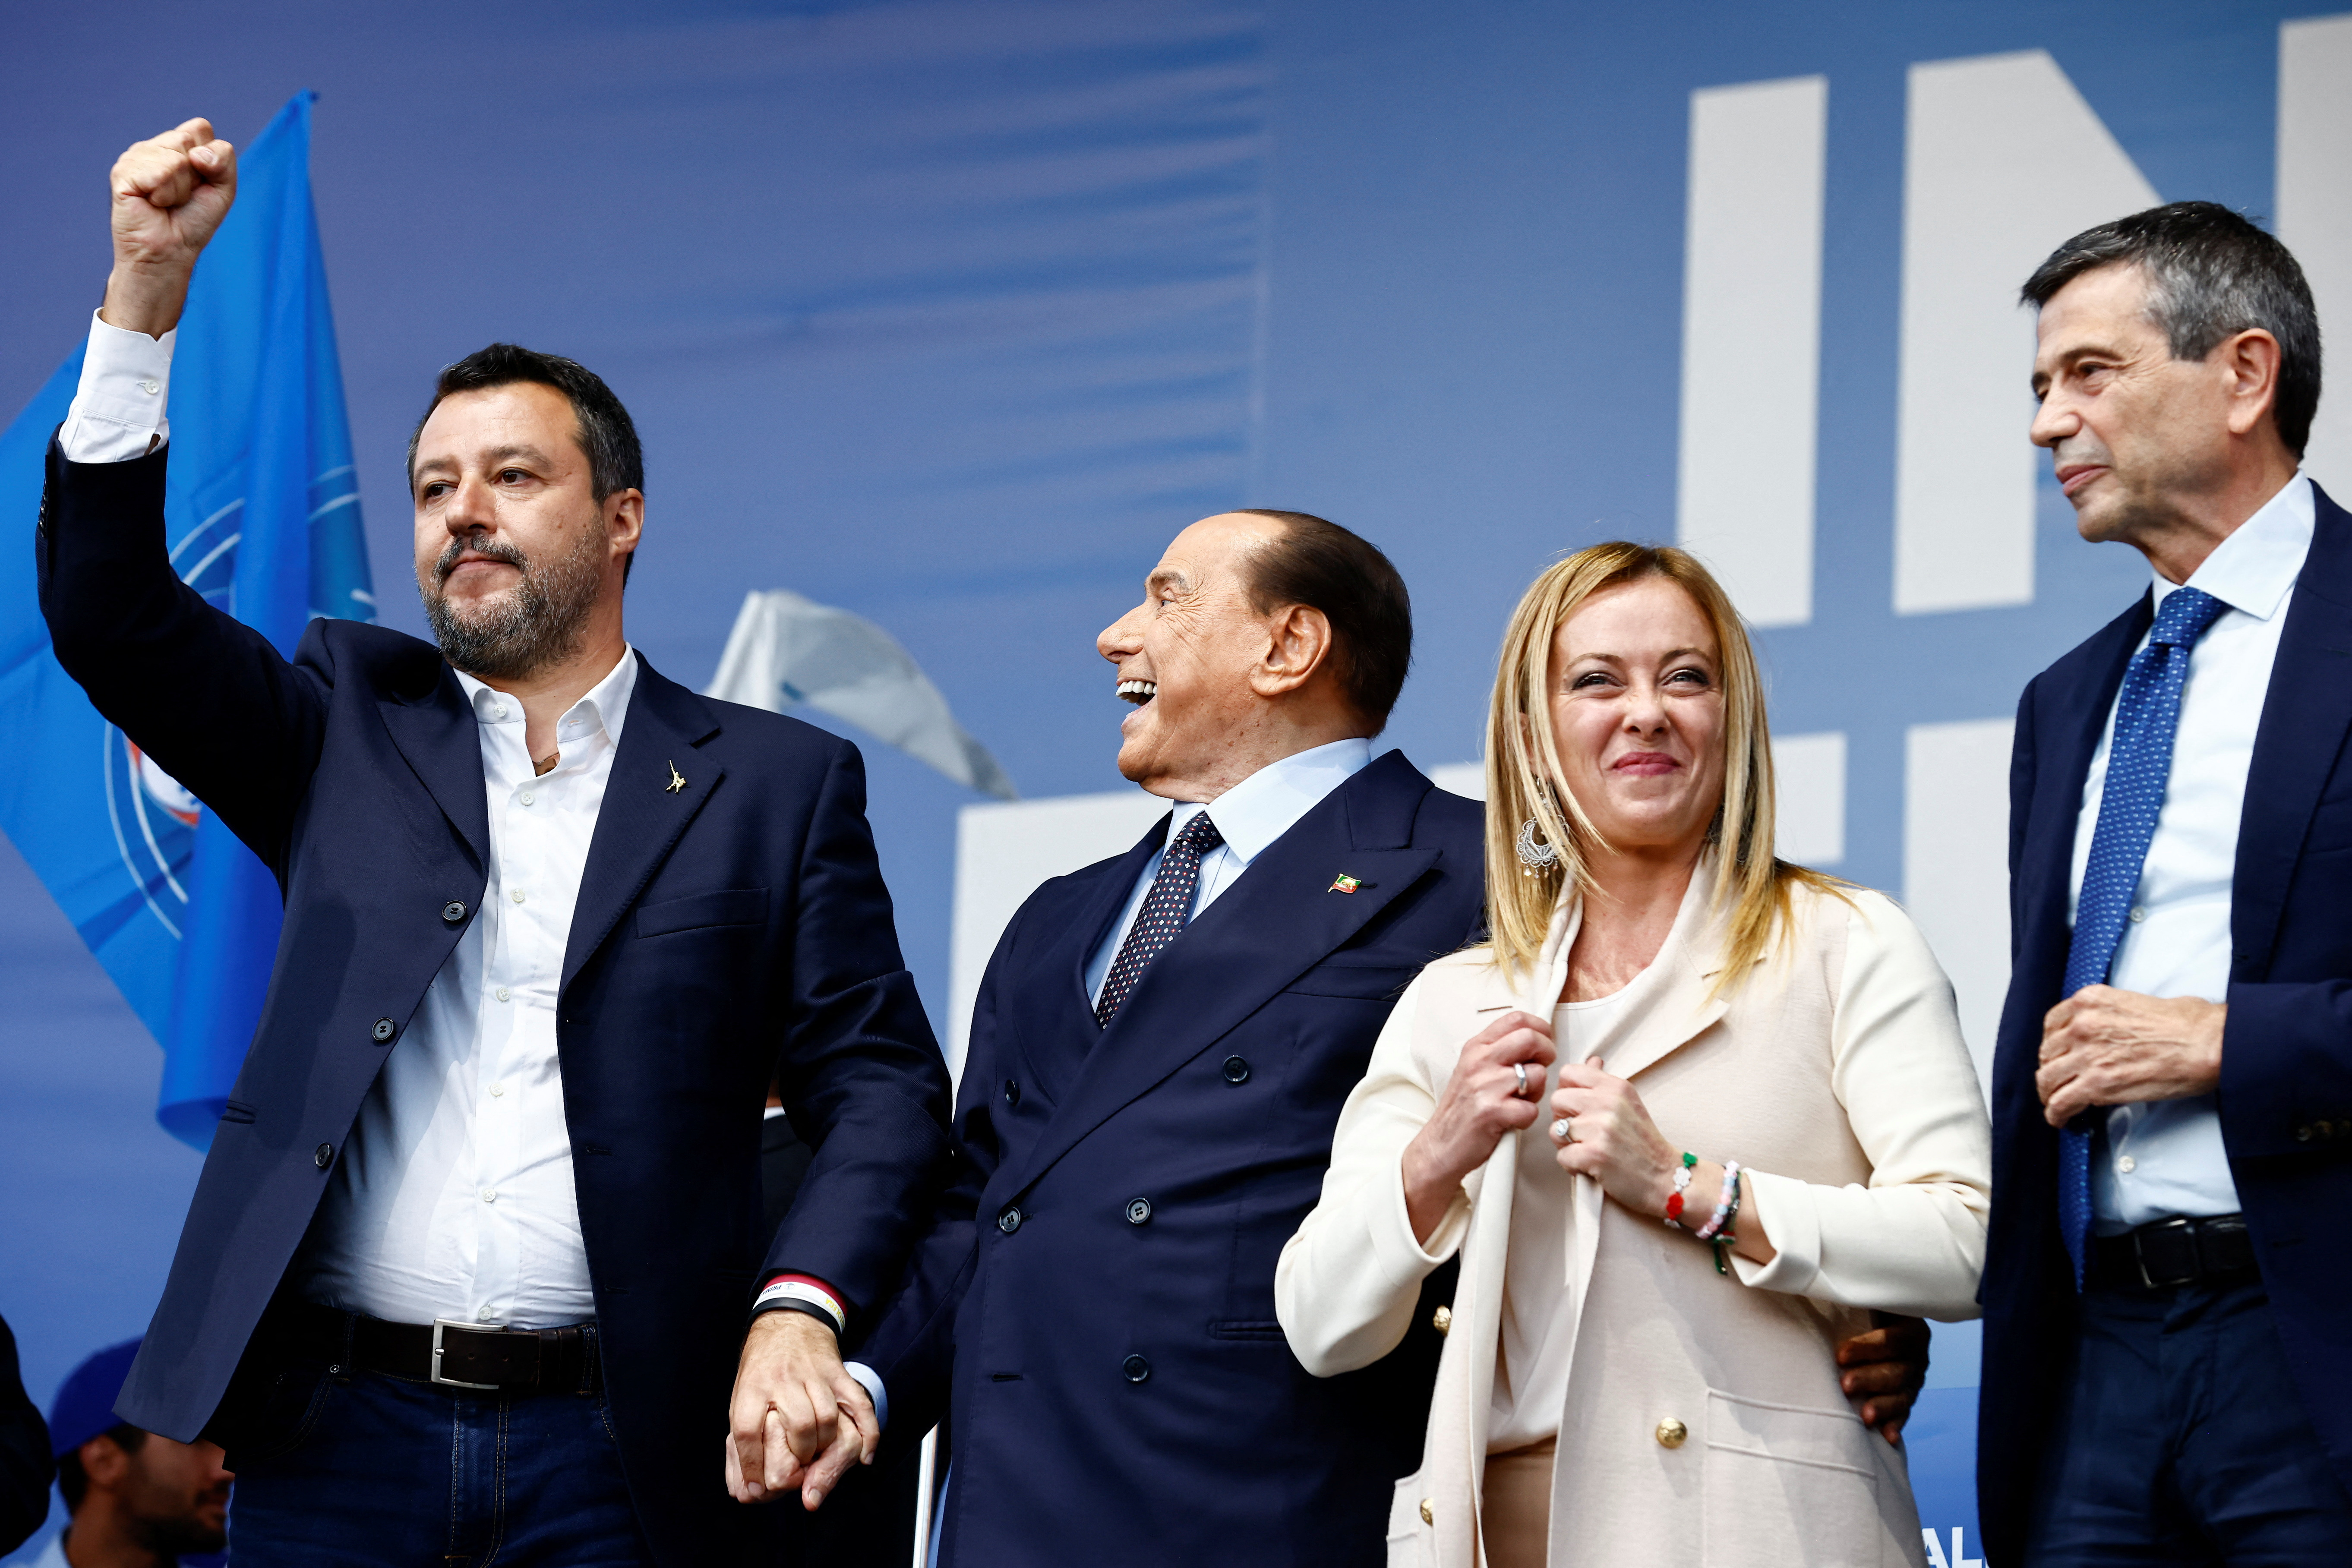 Elements of the new Italian government: Matteo Salvini of Lega, Silvio Berlusconi of Forza Italia and Giorgia Meloni of the neo-fascist Fratelli, during a campaign event in Rome in September.  (REUTERS/Yara Nardi).